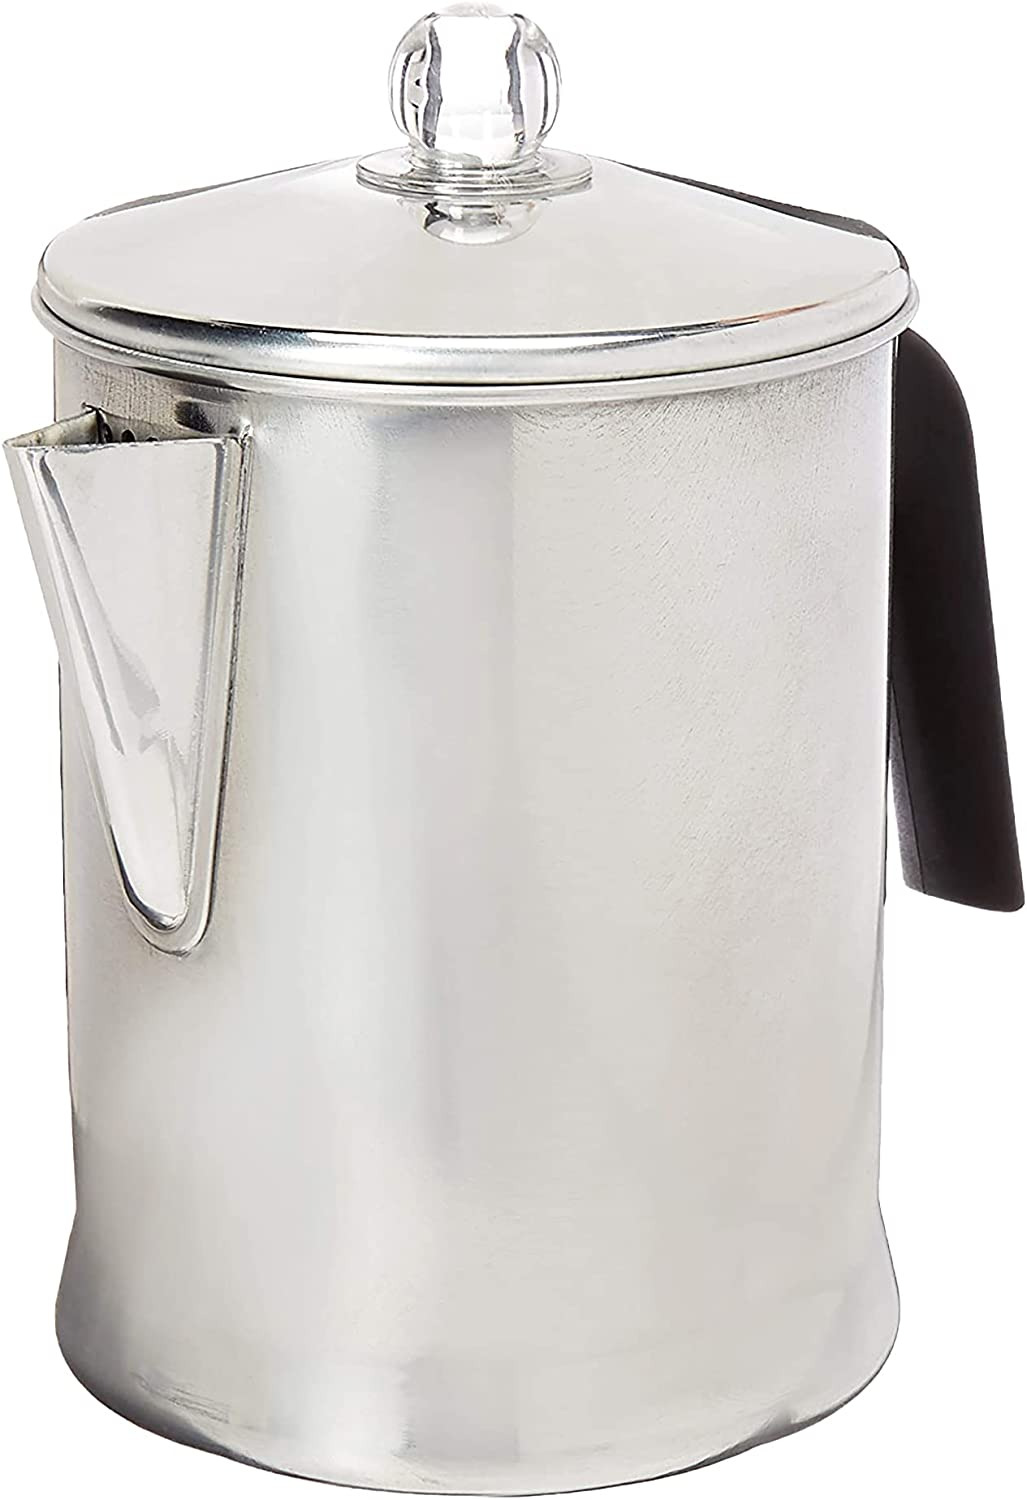 Heavy Duty Stove Top Percolator Coffee Pot Maker Aluminum Steel 9-Cup. 3-Day